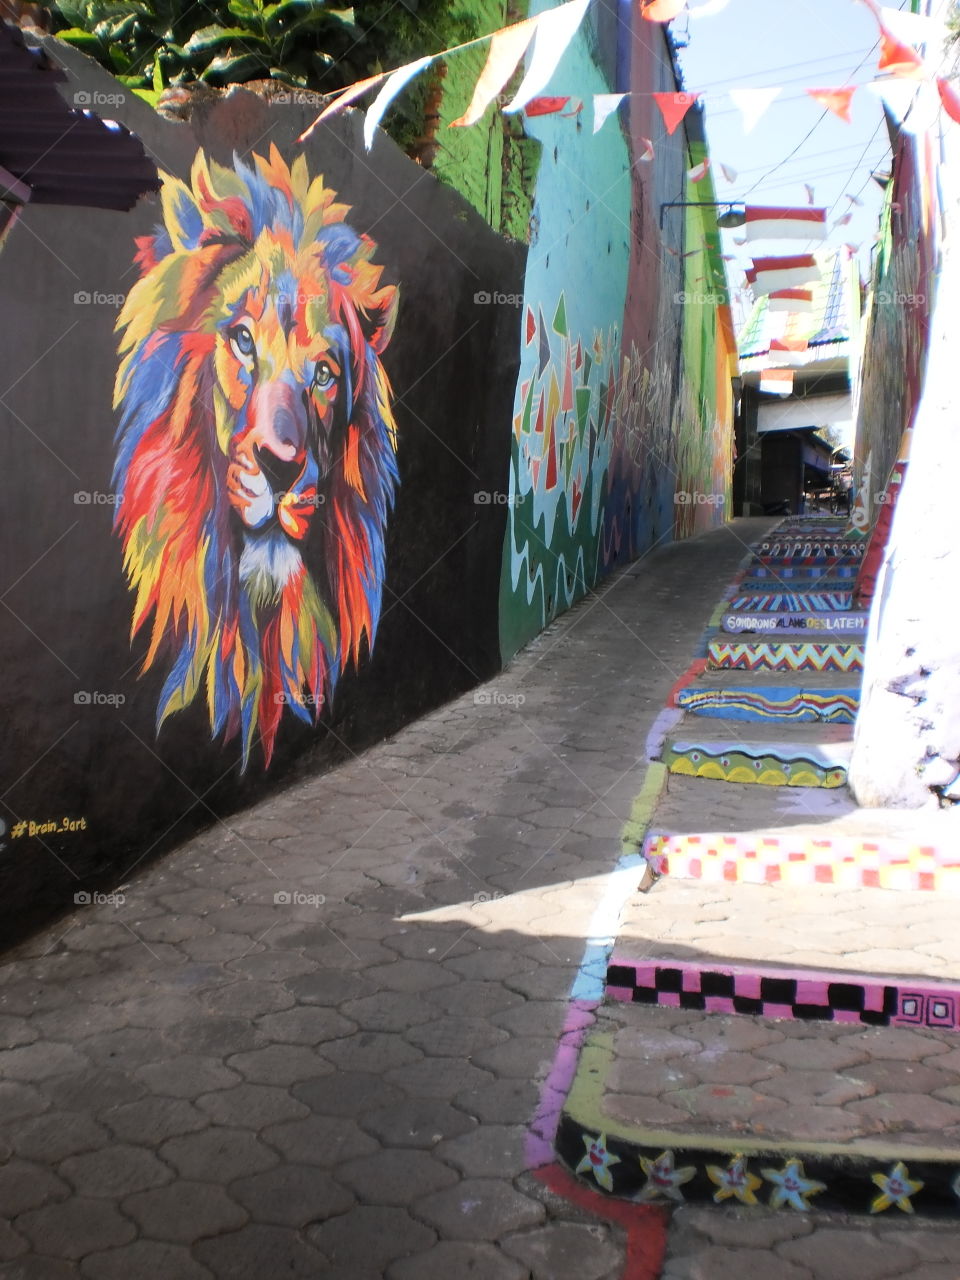 Lion Arema ( Jodipan Colour Village ) 2017